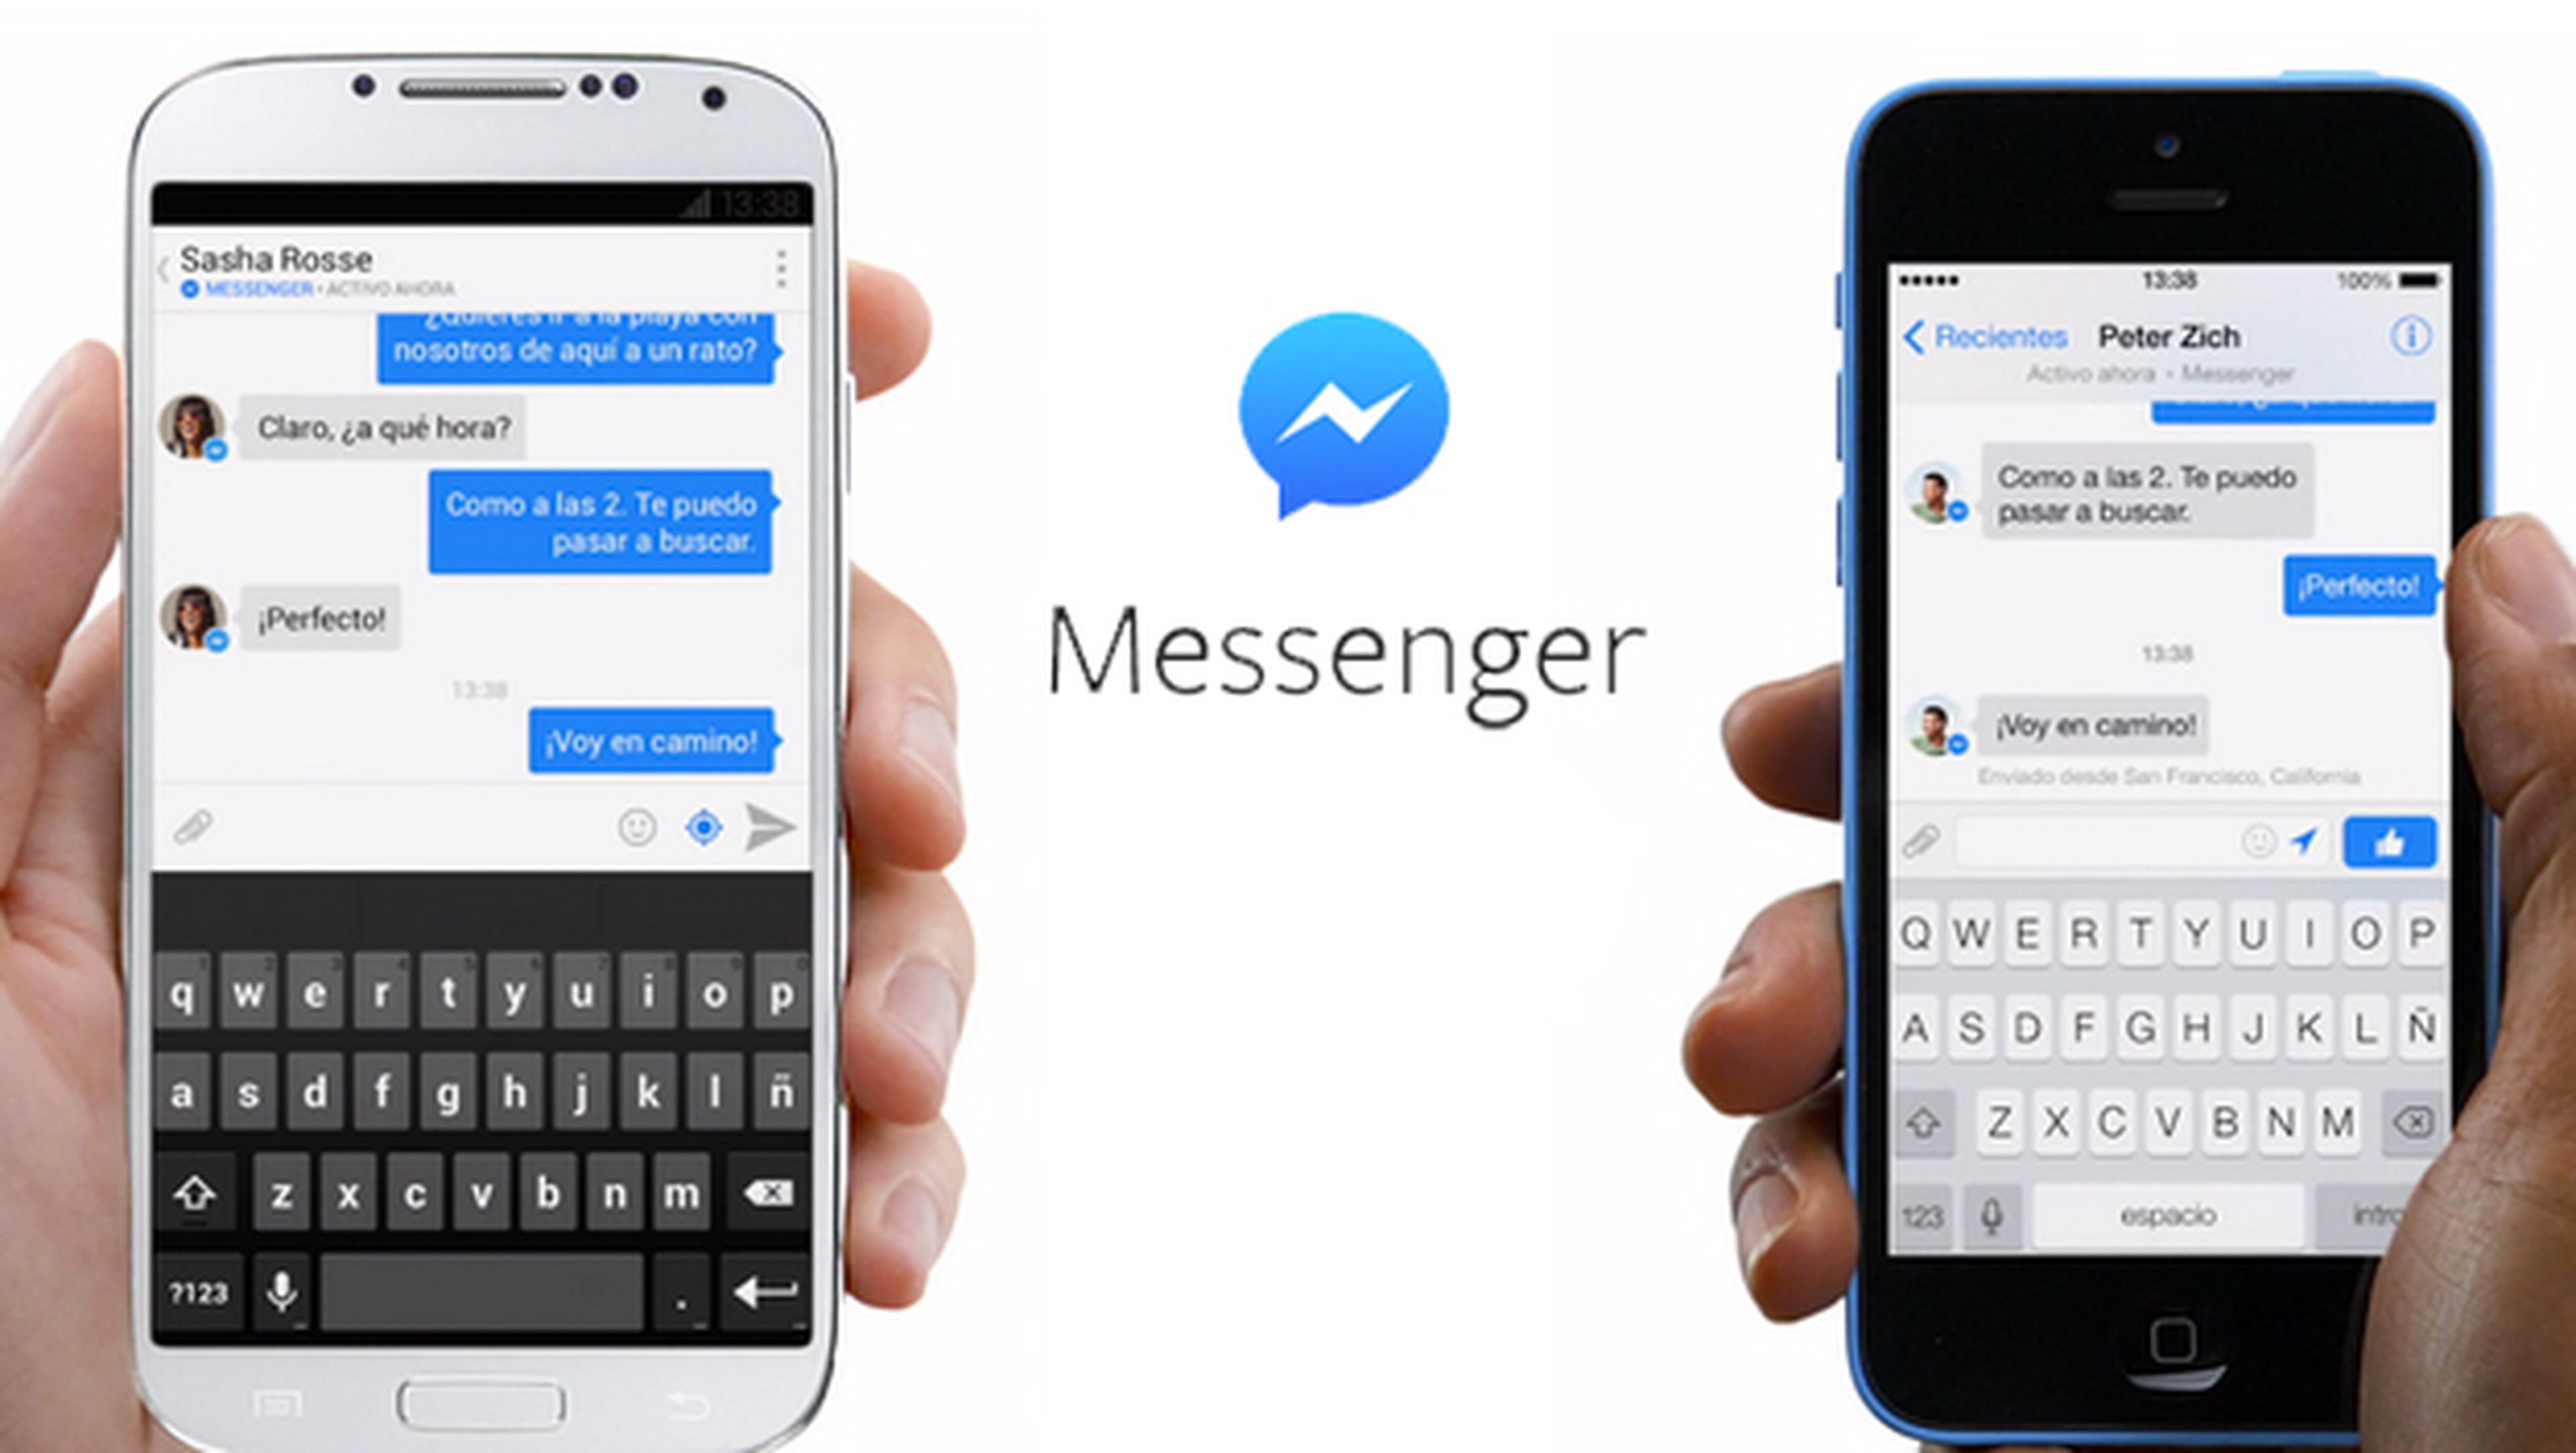 Ya es posible mandar vídeos a través de Facebook Messenger